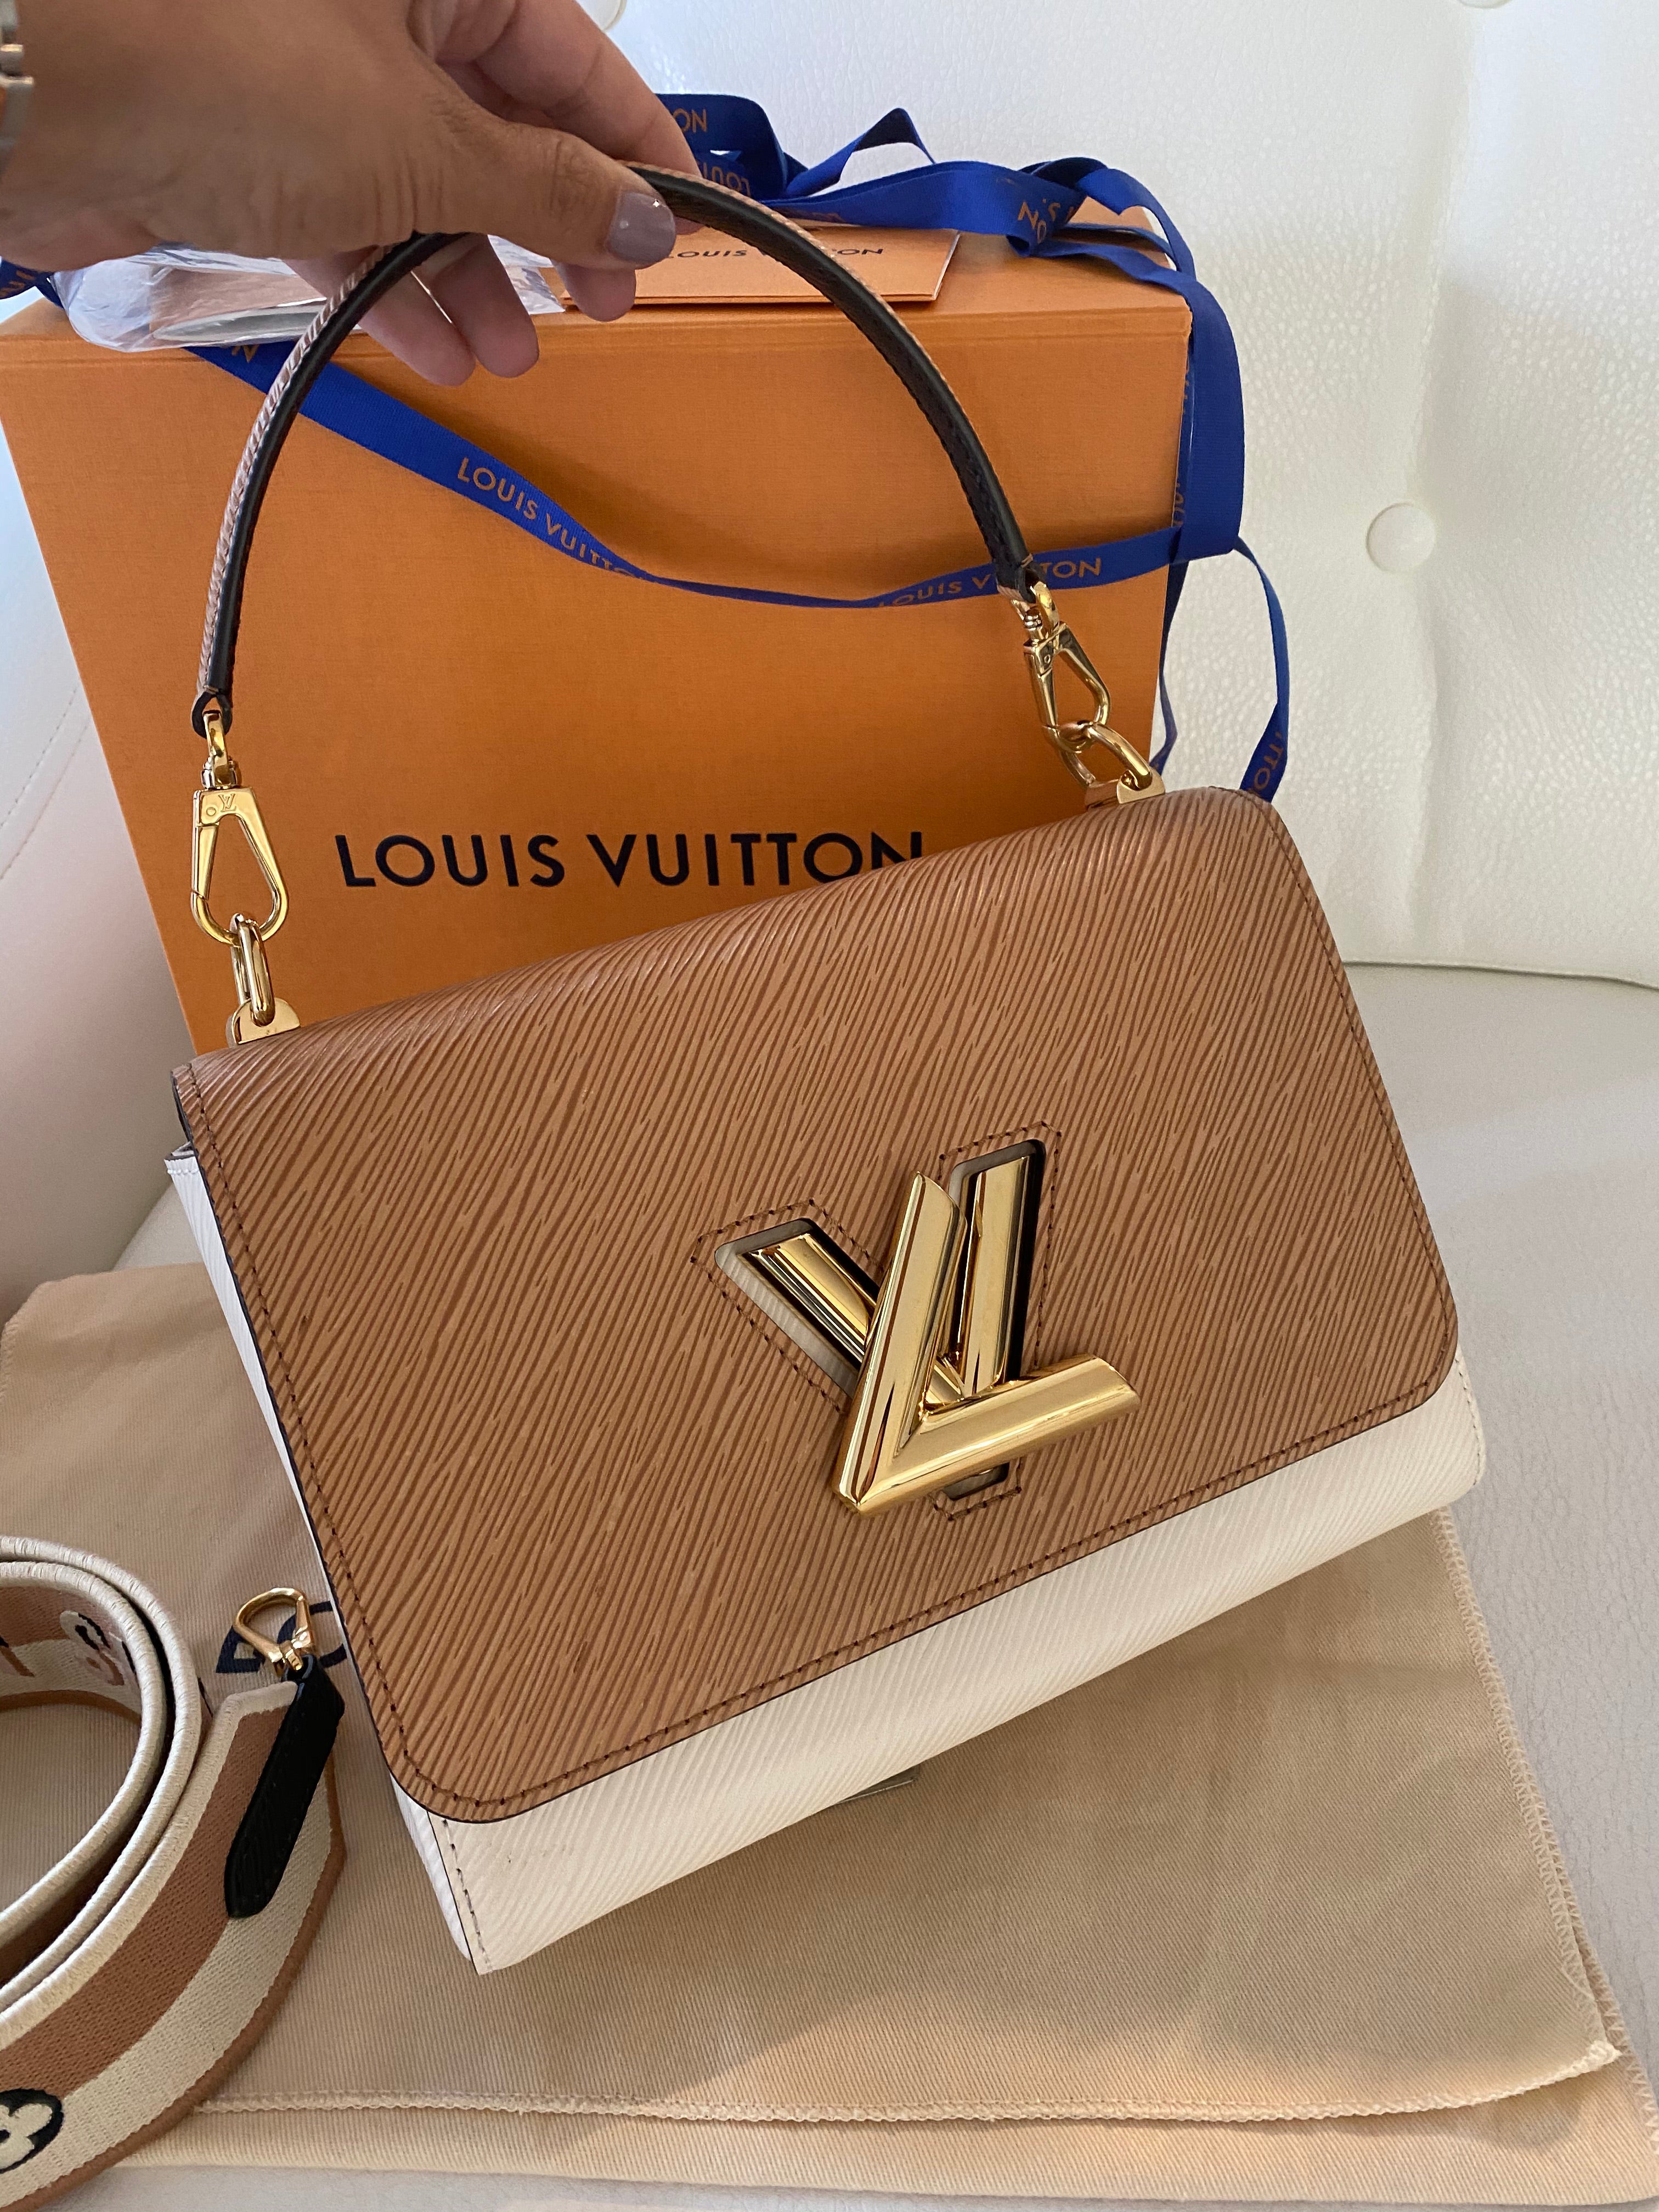 Louis Vuitton twist bag